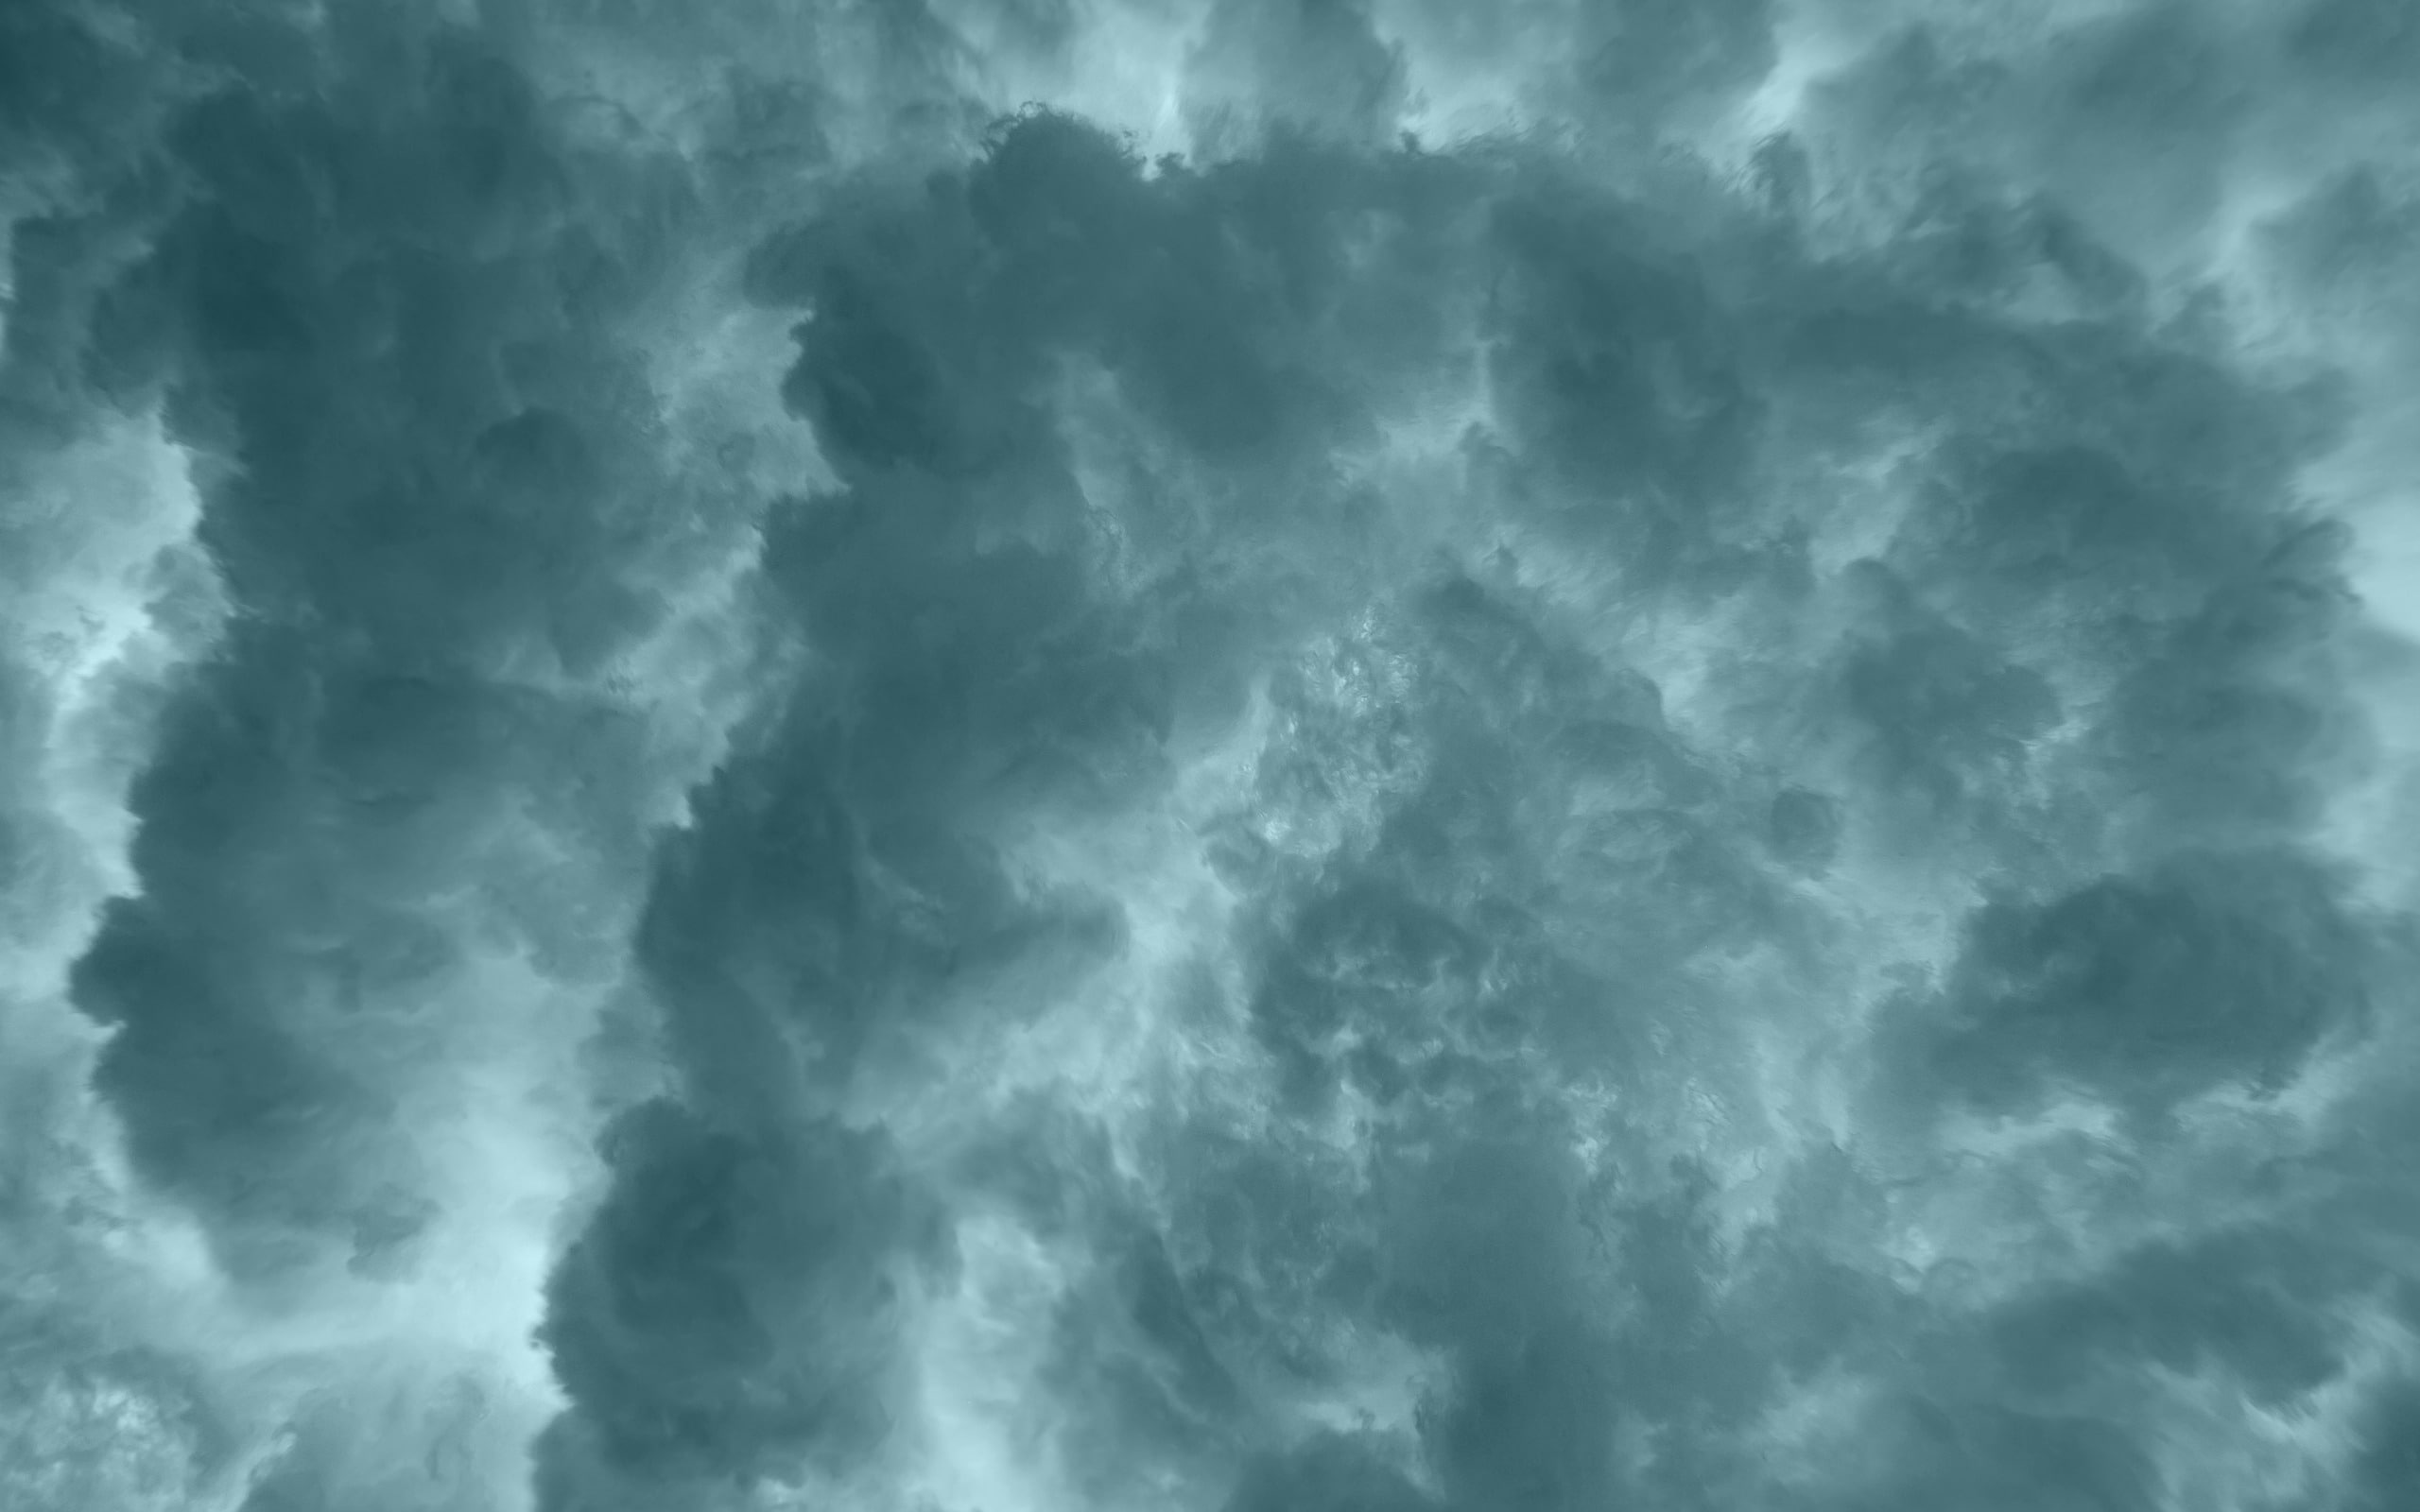 Underwater-MAC OS X Mavericks HD Desktop Wallpaper.., grey and white clouds